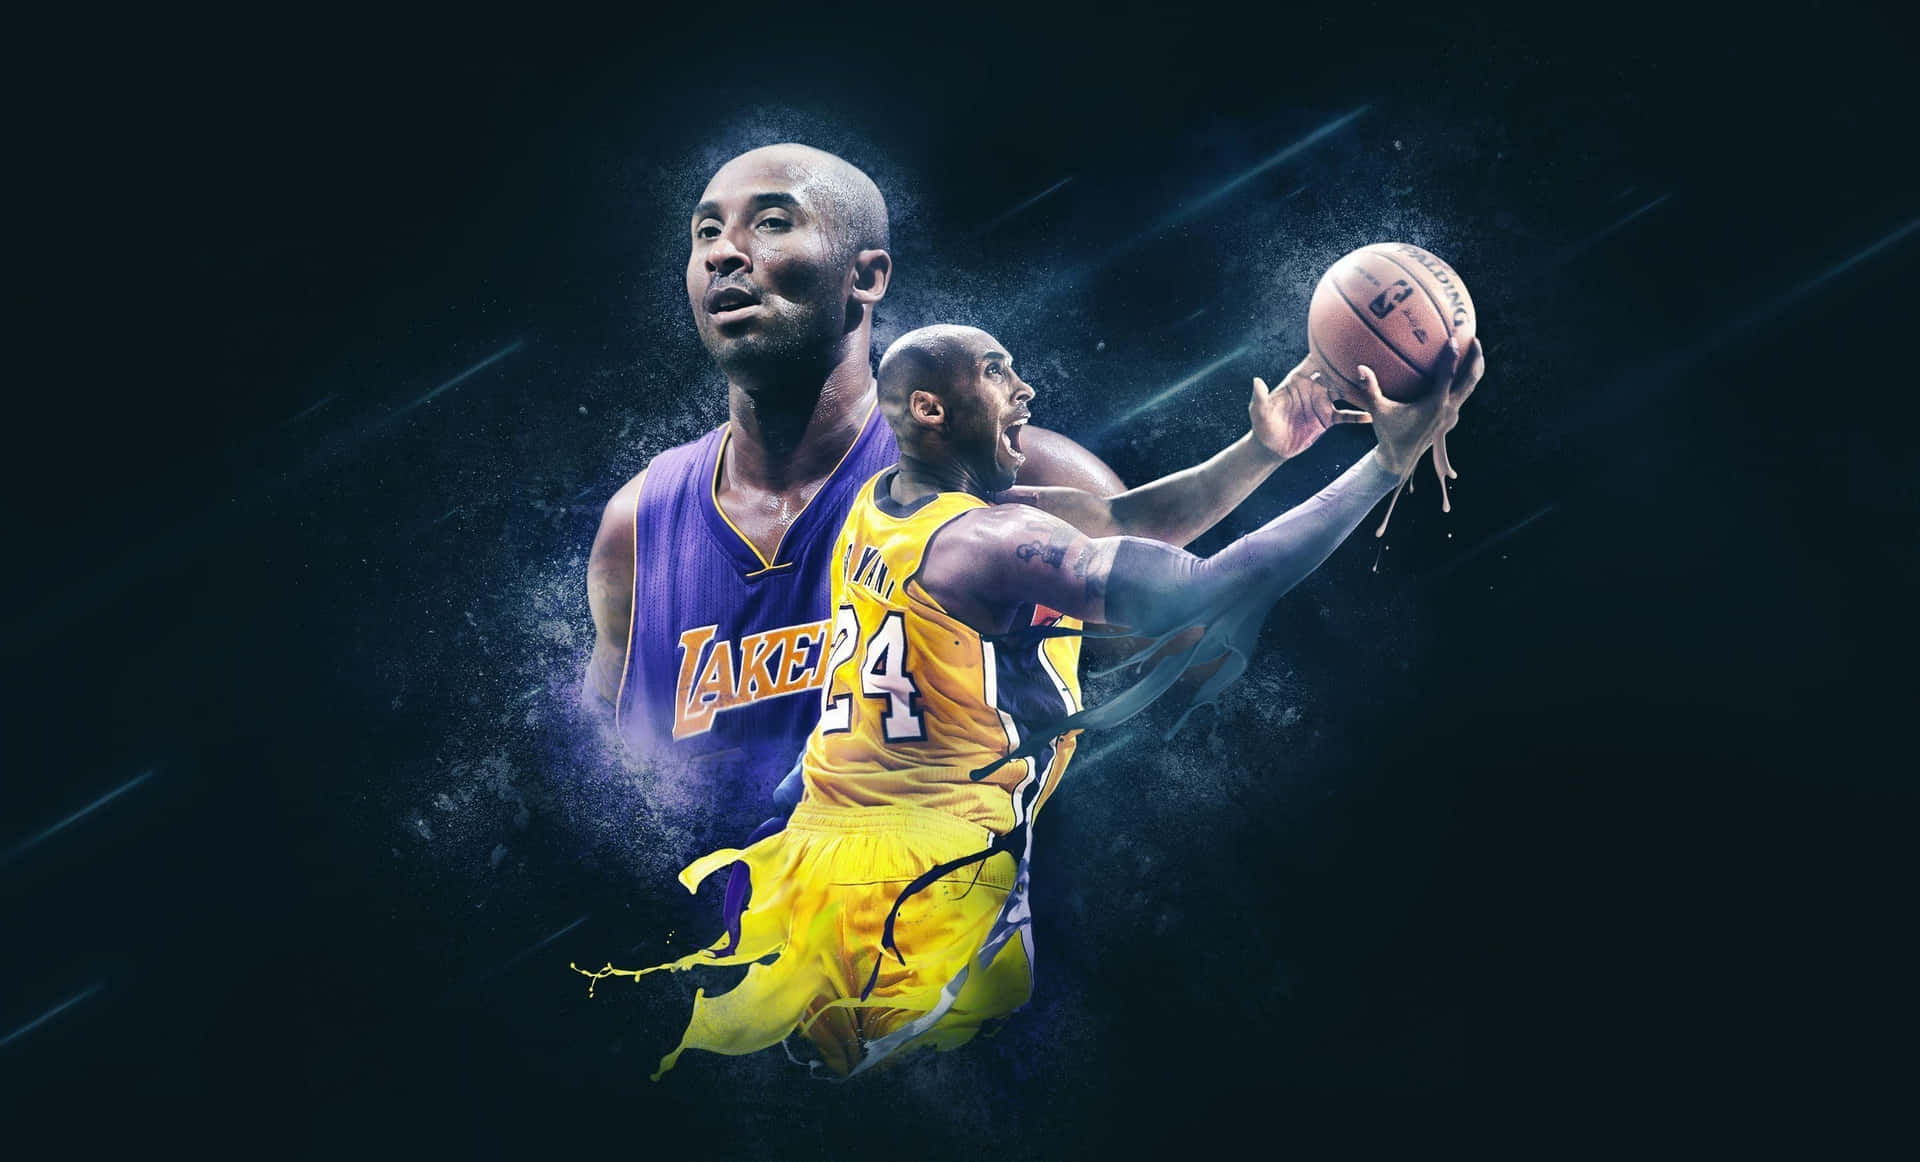 "Kobe Bryant, An Unmatched Legacy"